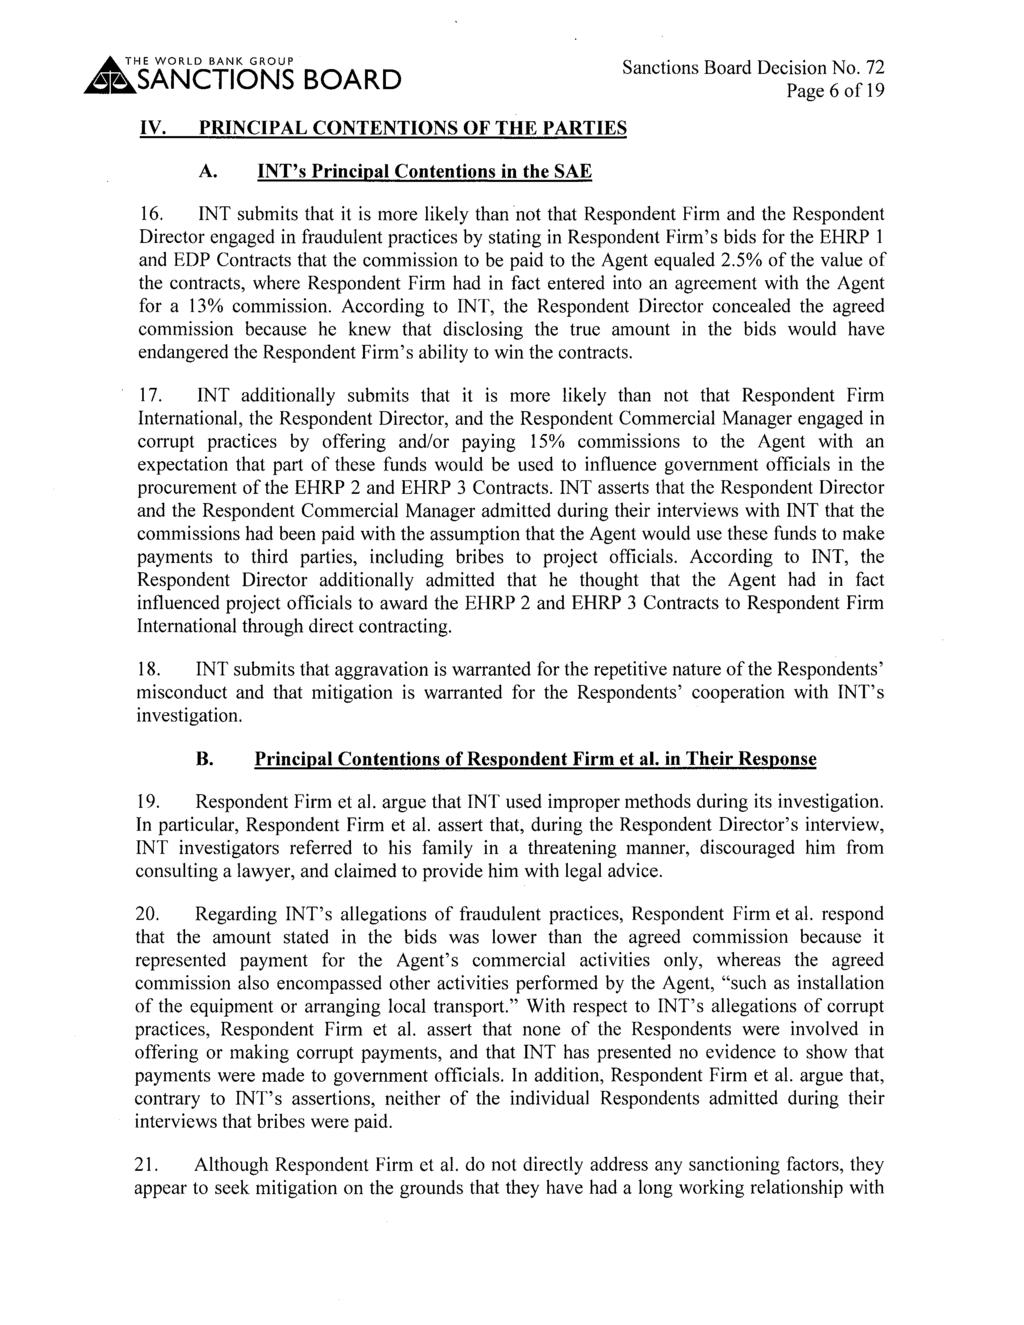 ~HsXI\Jci-lo~ls soaro Sanctions Board Decision No. 72 Page 6 of 19 IV. PRINCIPAL CONTENTIONS OF THE PARTIES A. INT's Principal Contentions in the SAE 16.